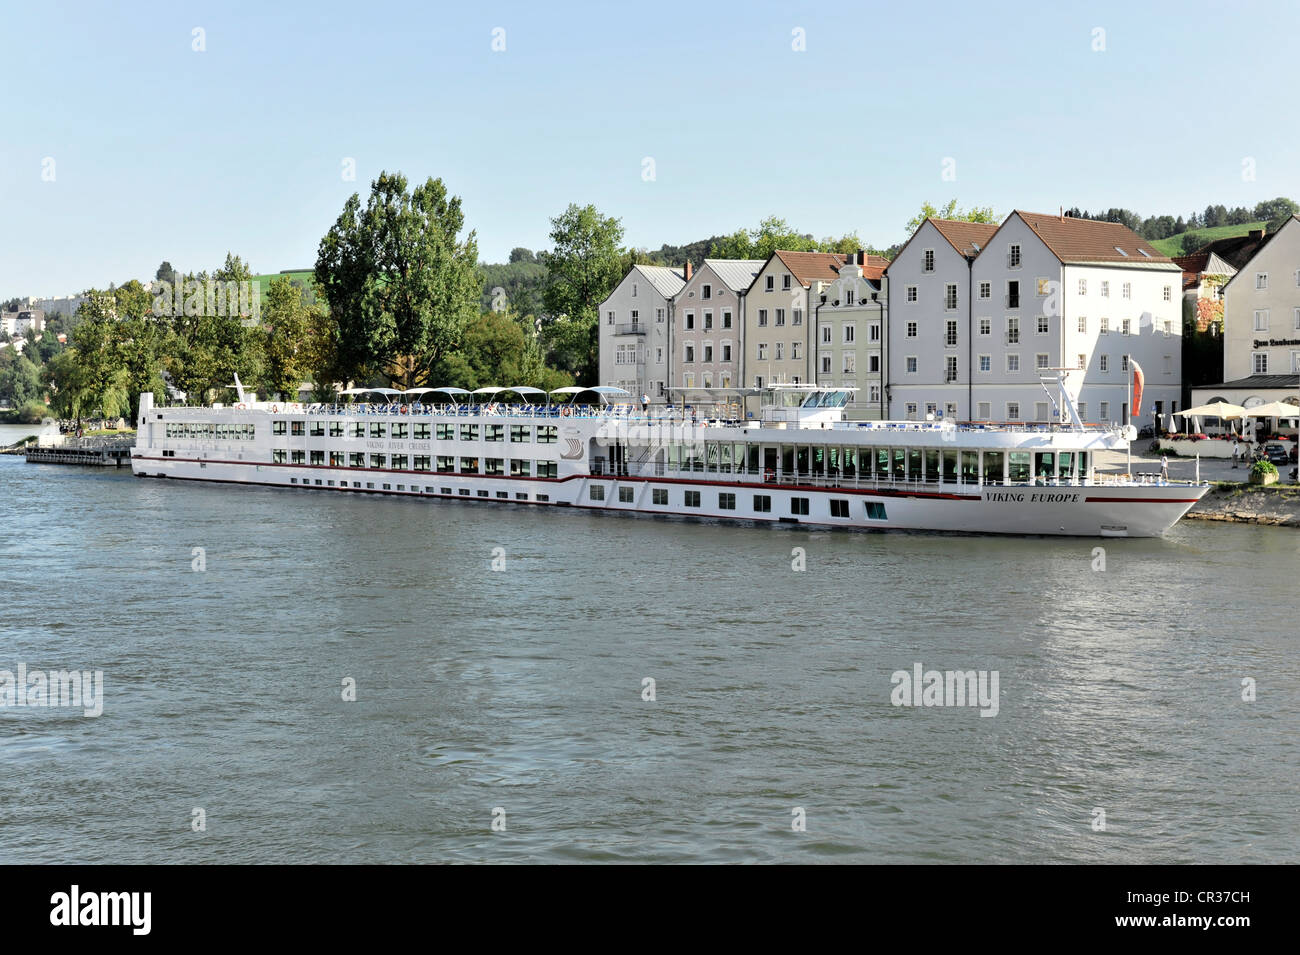 Viking Europe river cruiser, built in 2001, 114.30 m long, near Passau, Bavaria, Germany, Europe Stock Photo